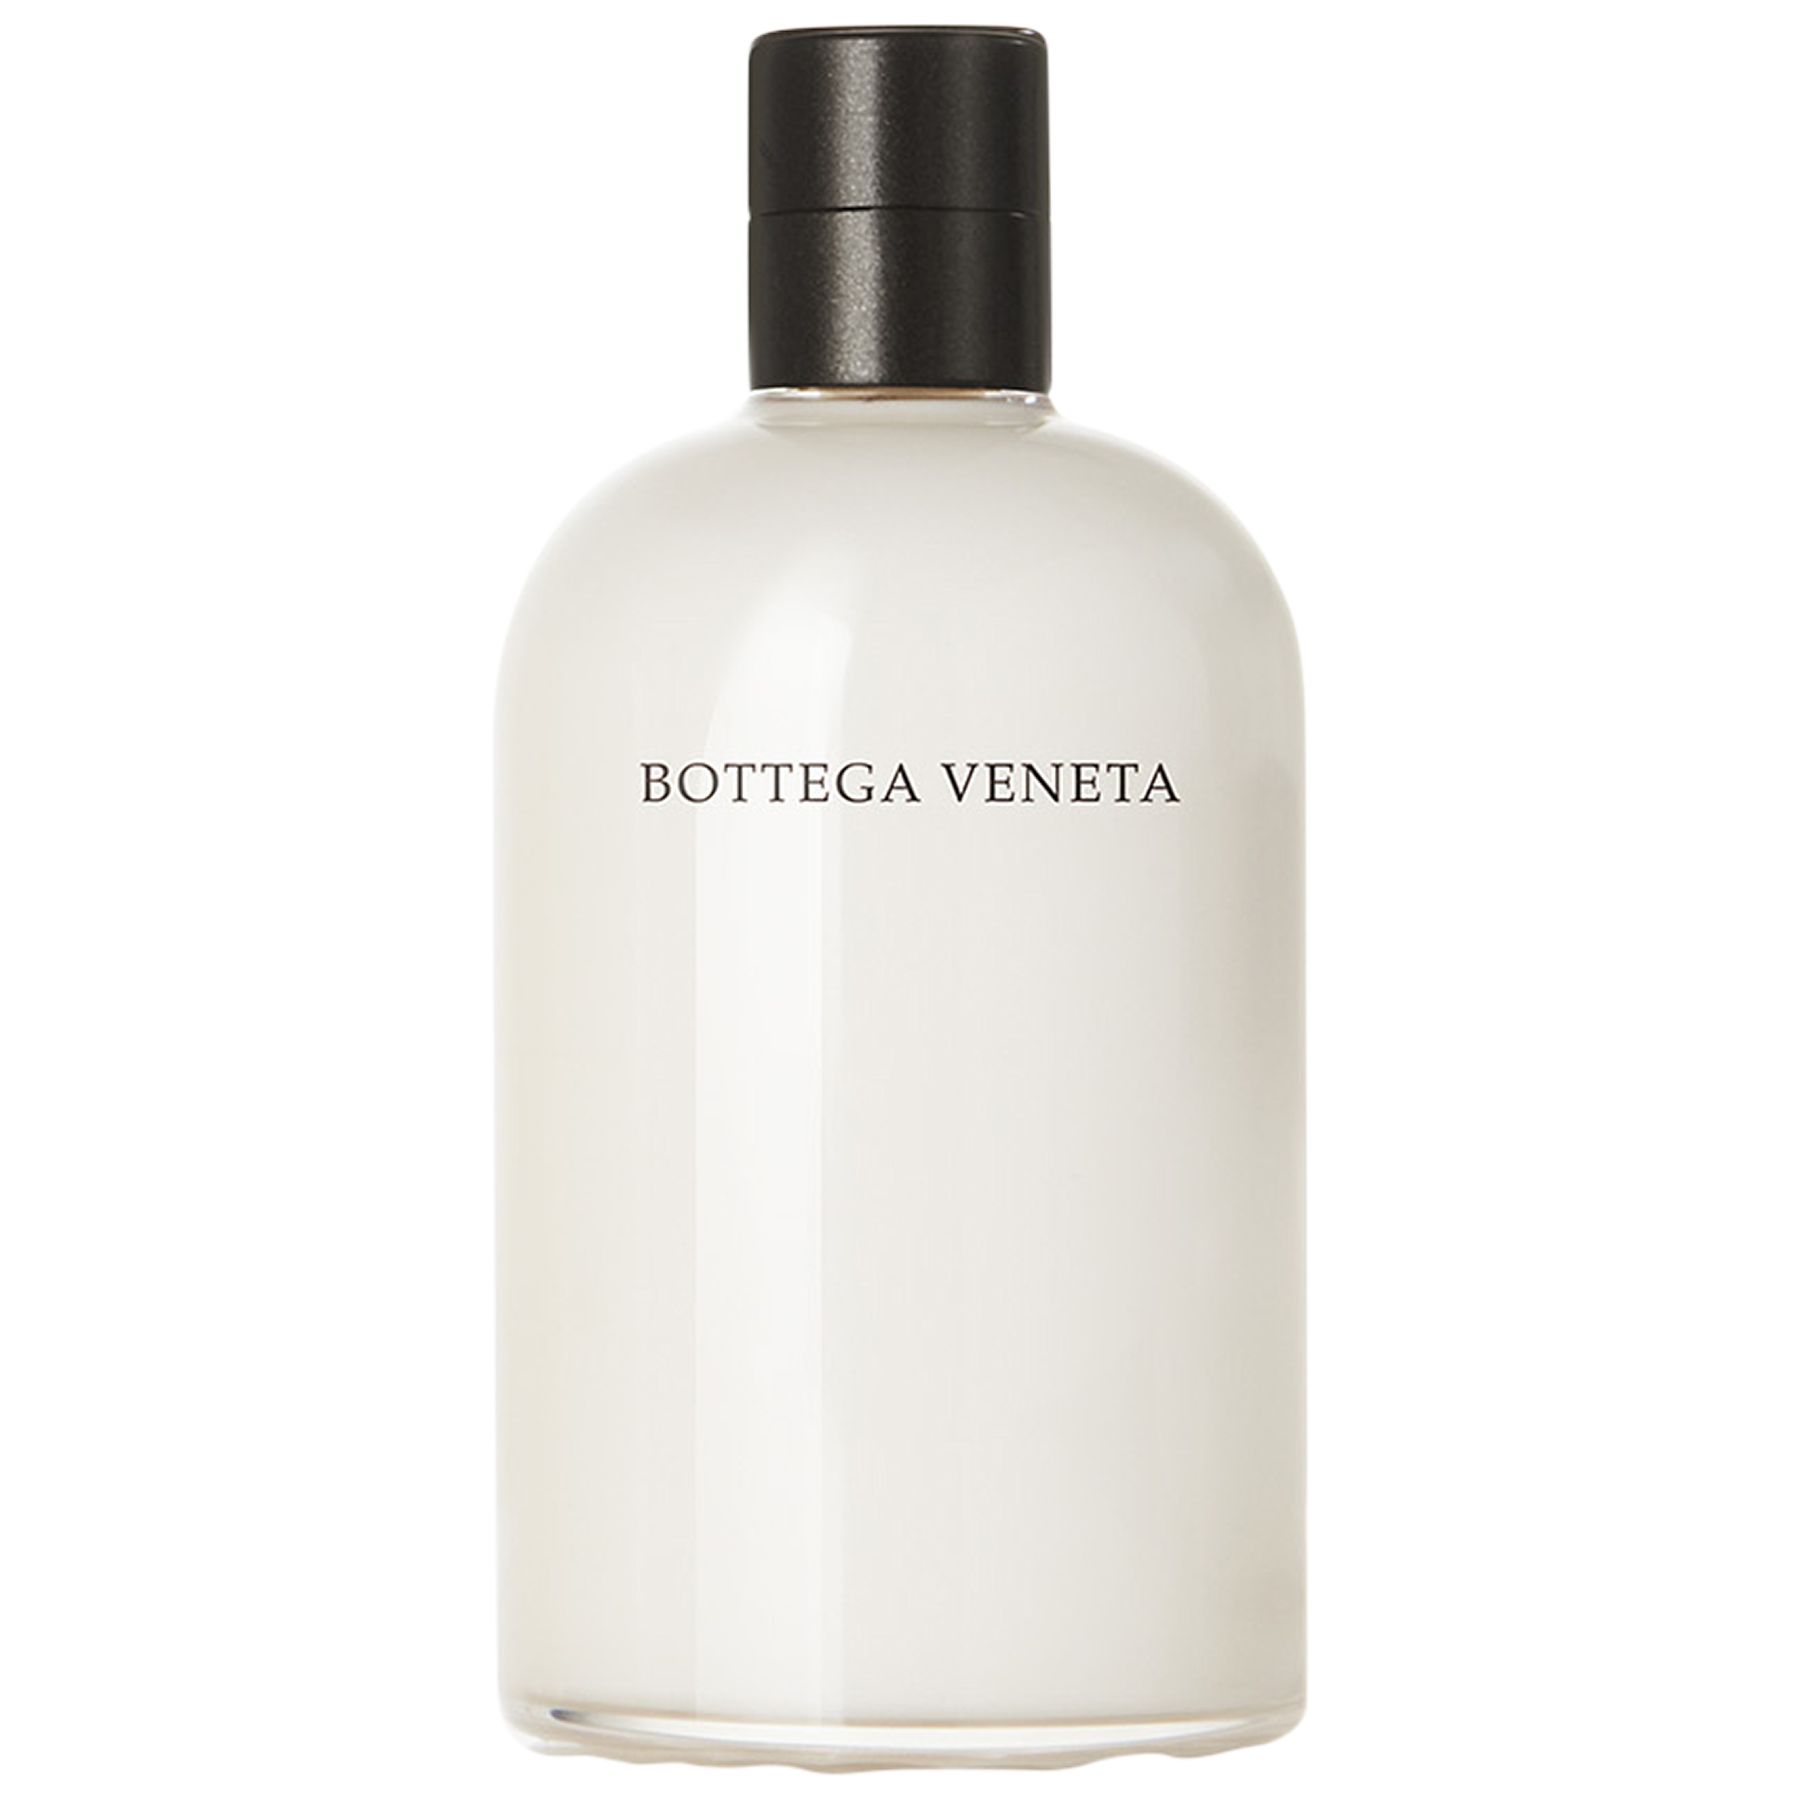 Bottega Veneta Parfum Body Lotion, 200ml at John Lewis & Partners